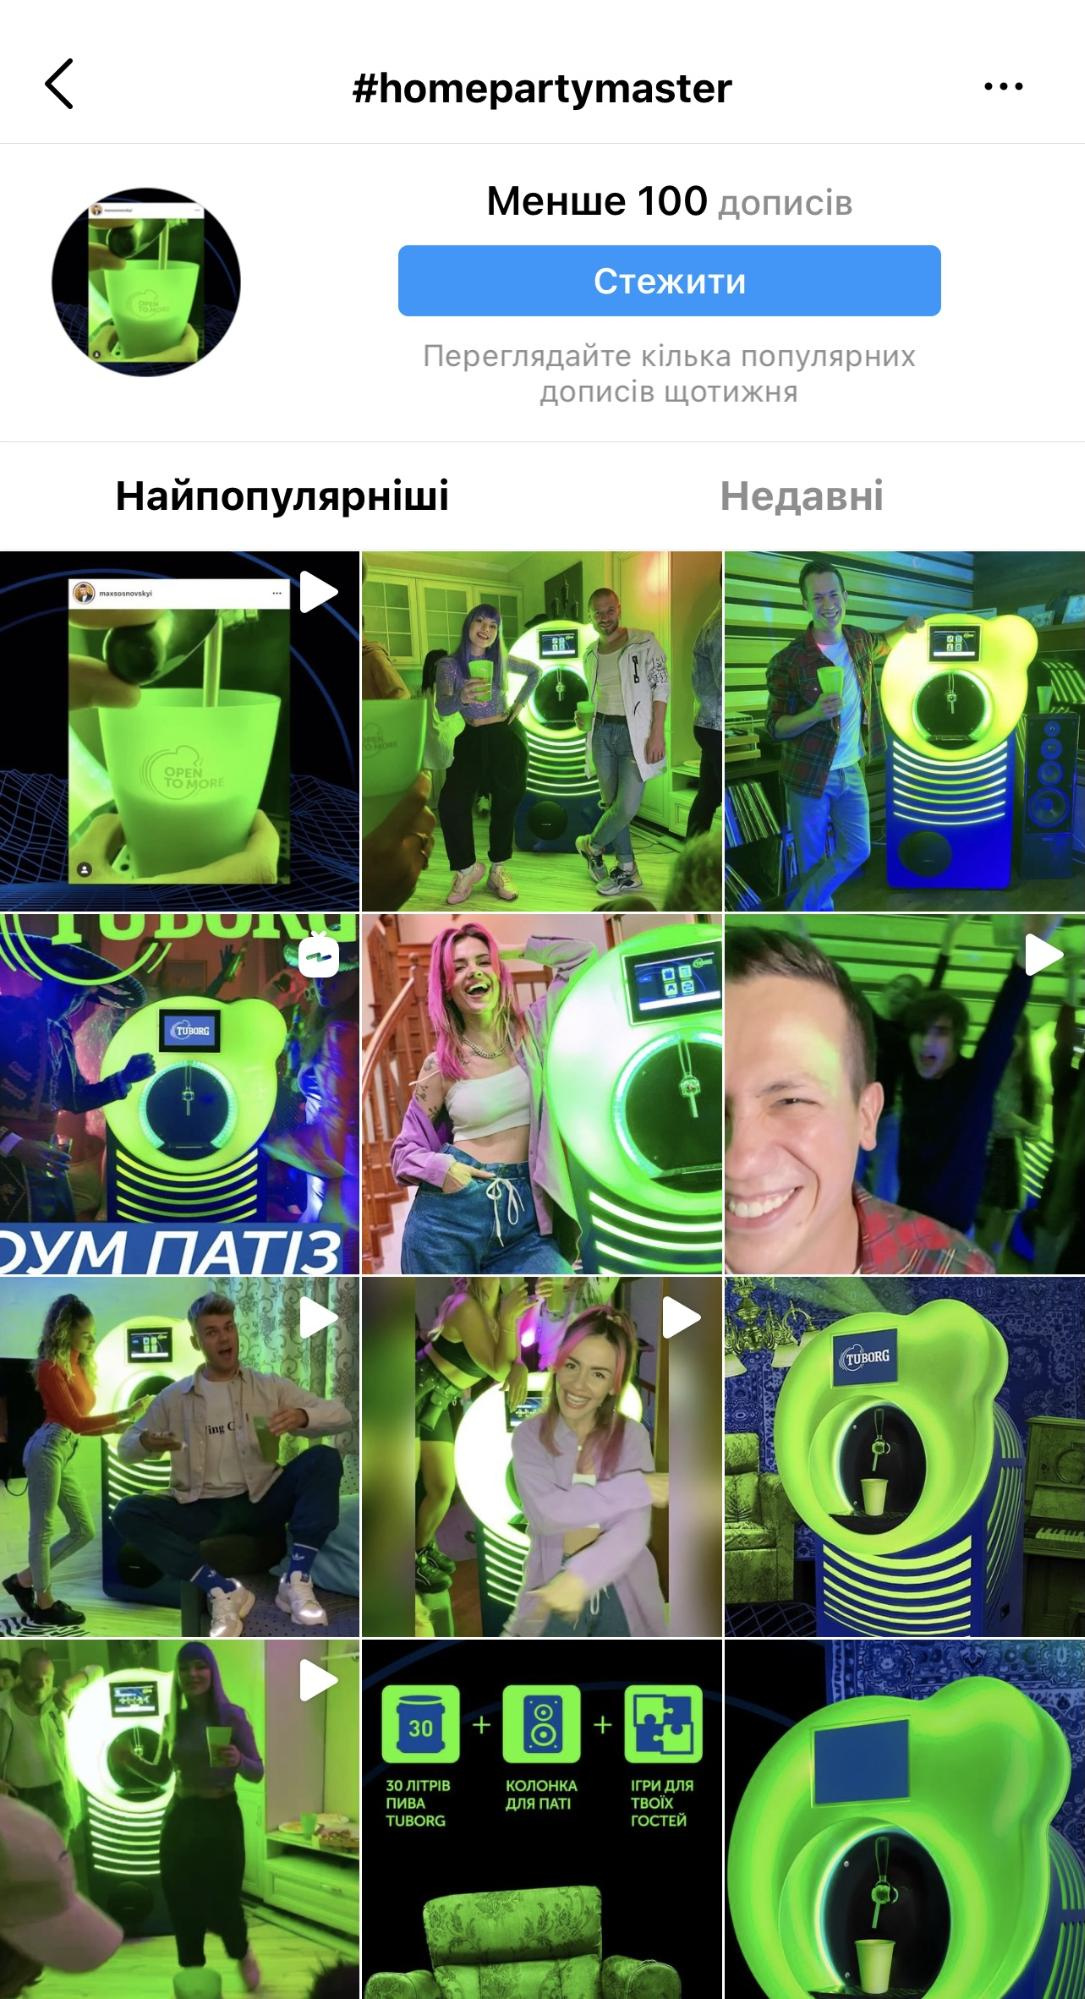 https://images.netpeak.net/blog/home-party-master-vid-mccann-kyiv.jpg